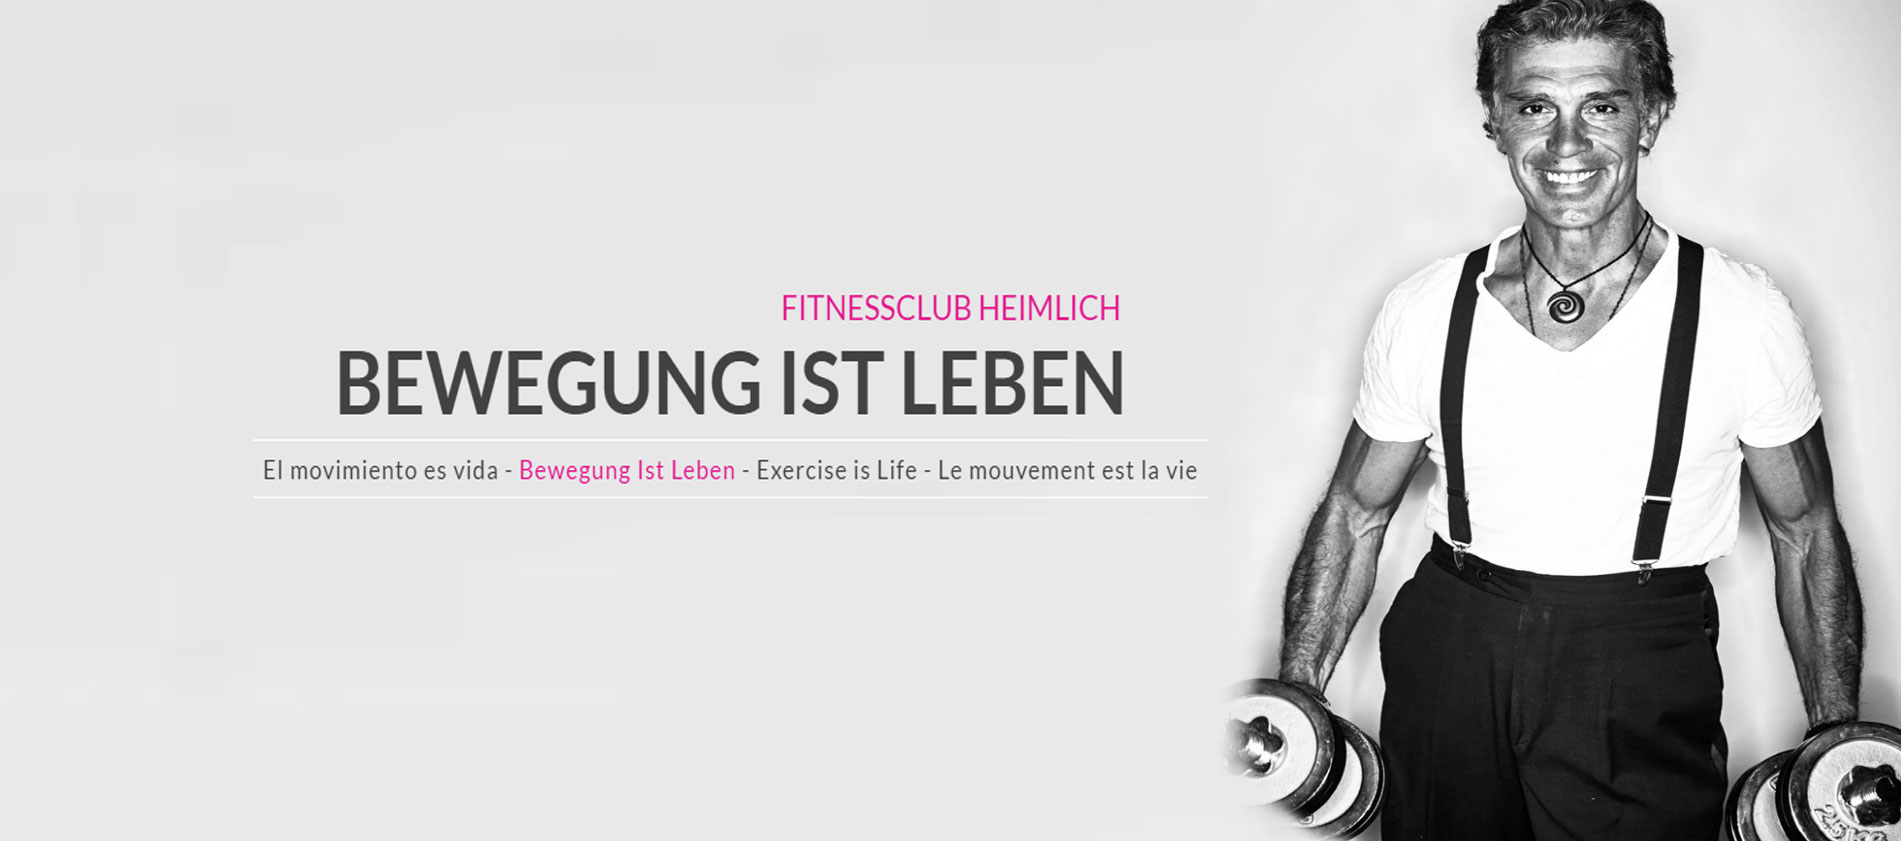 (c) Fitnessclub-heimlich.at